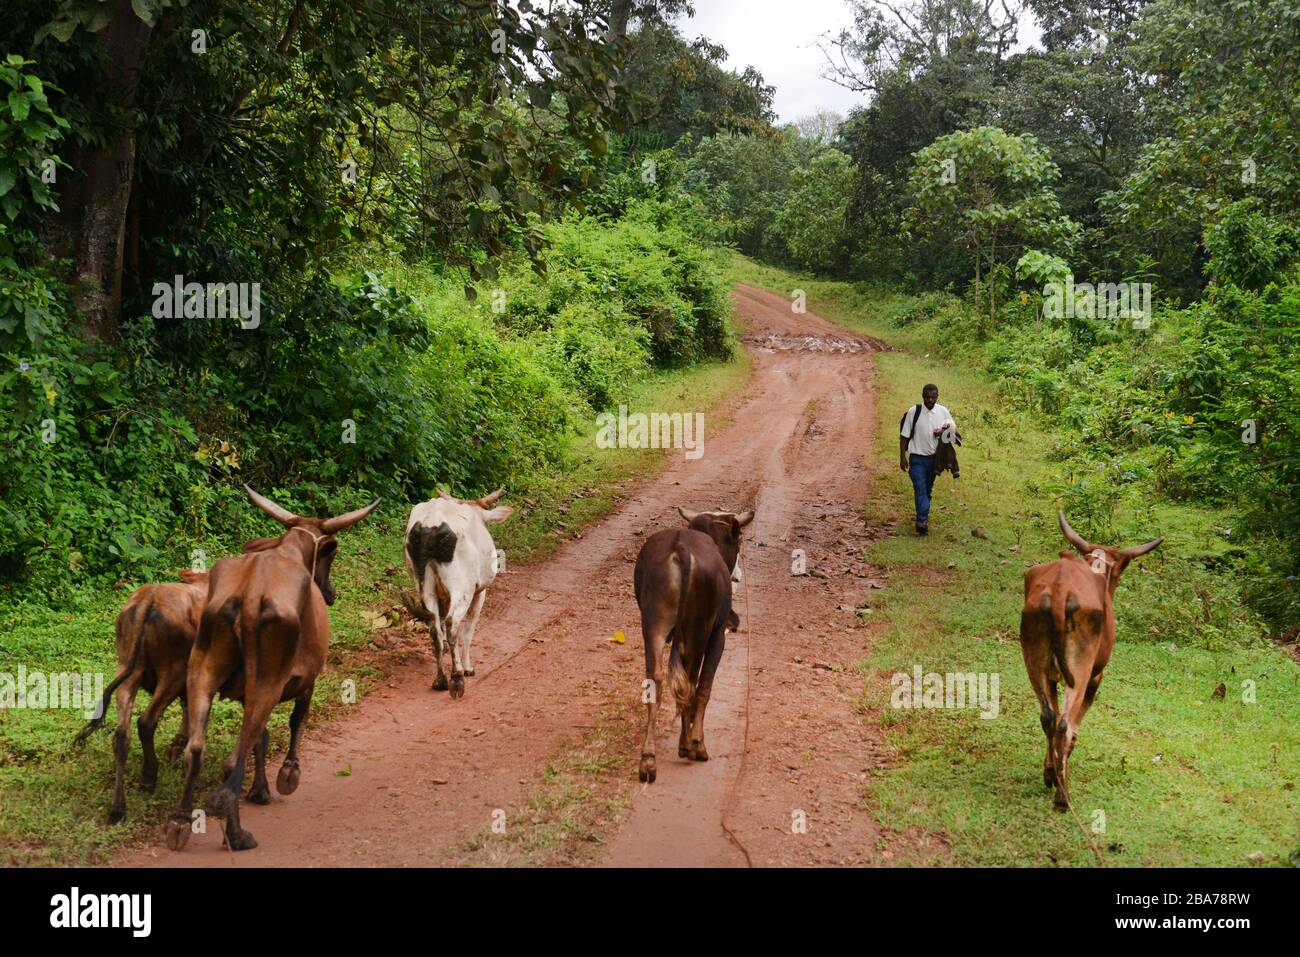 Cattle walking on a dirt road in the Kafa region of Ethiopia. Stock Photo